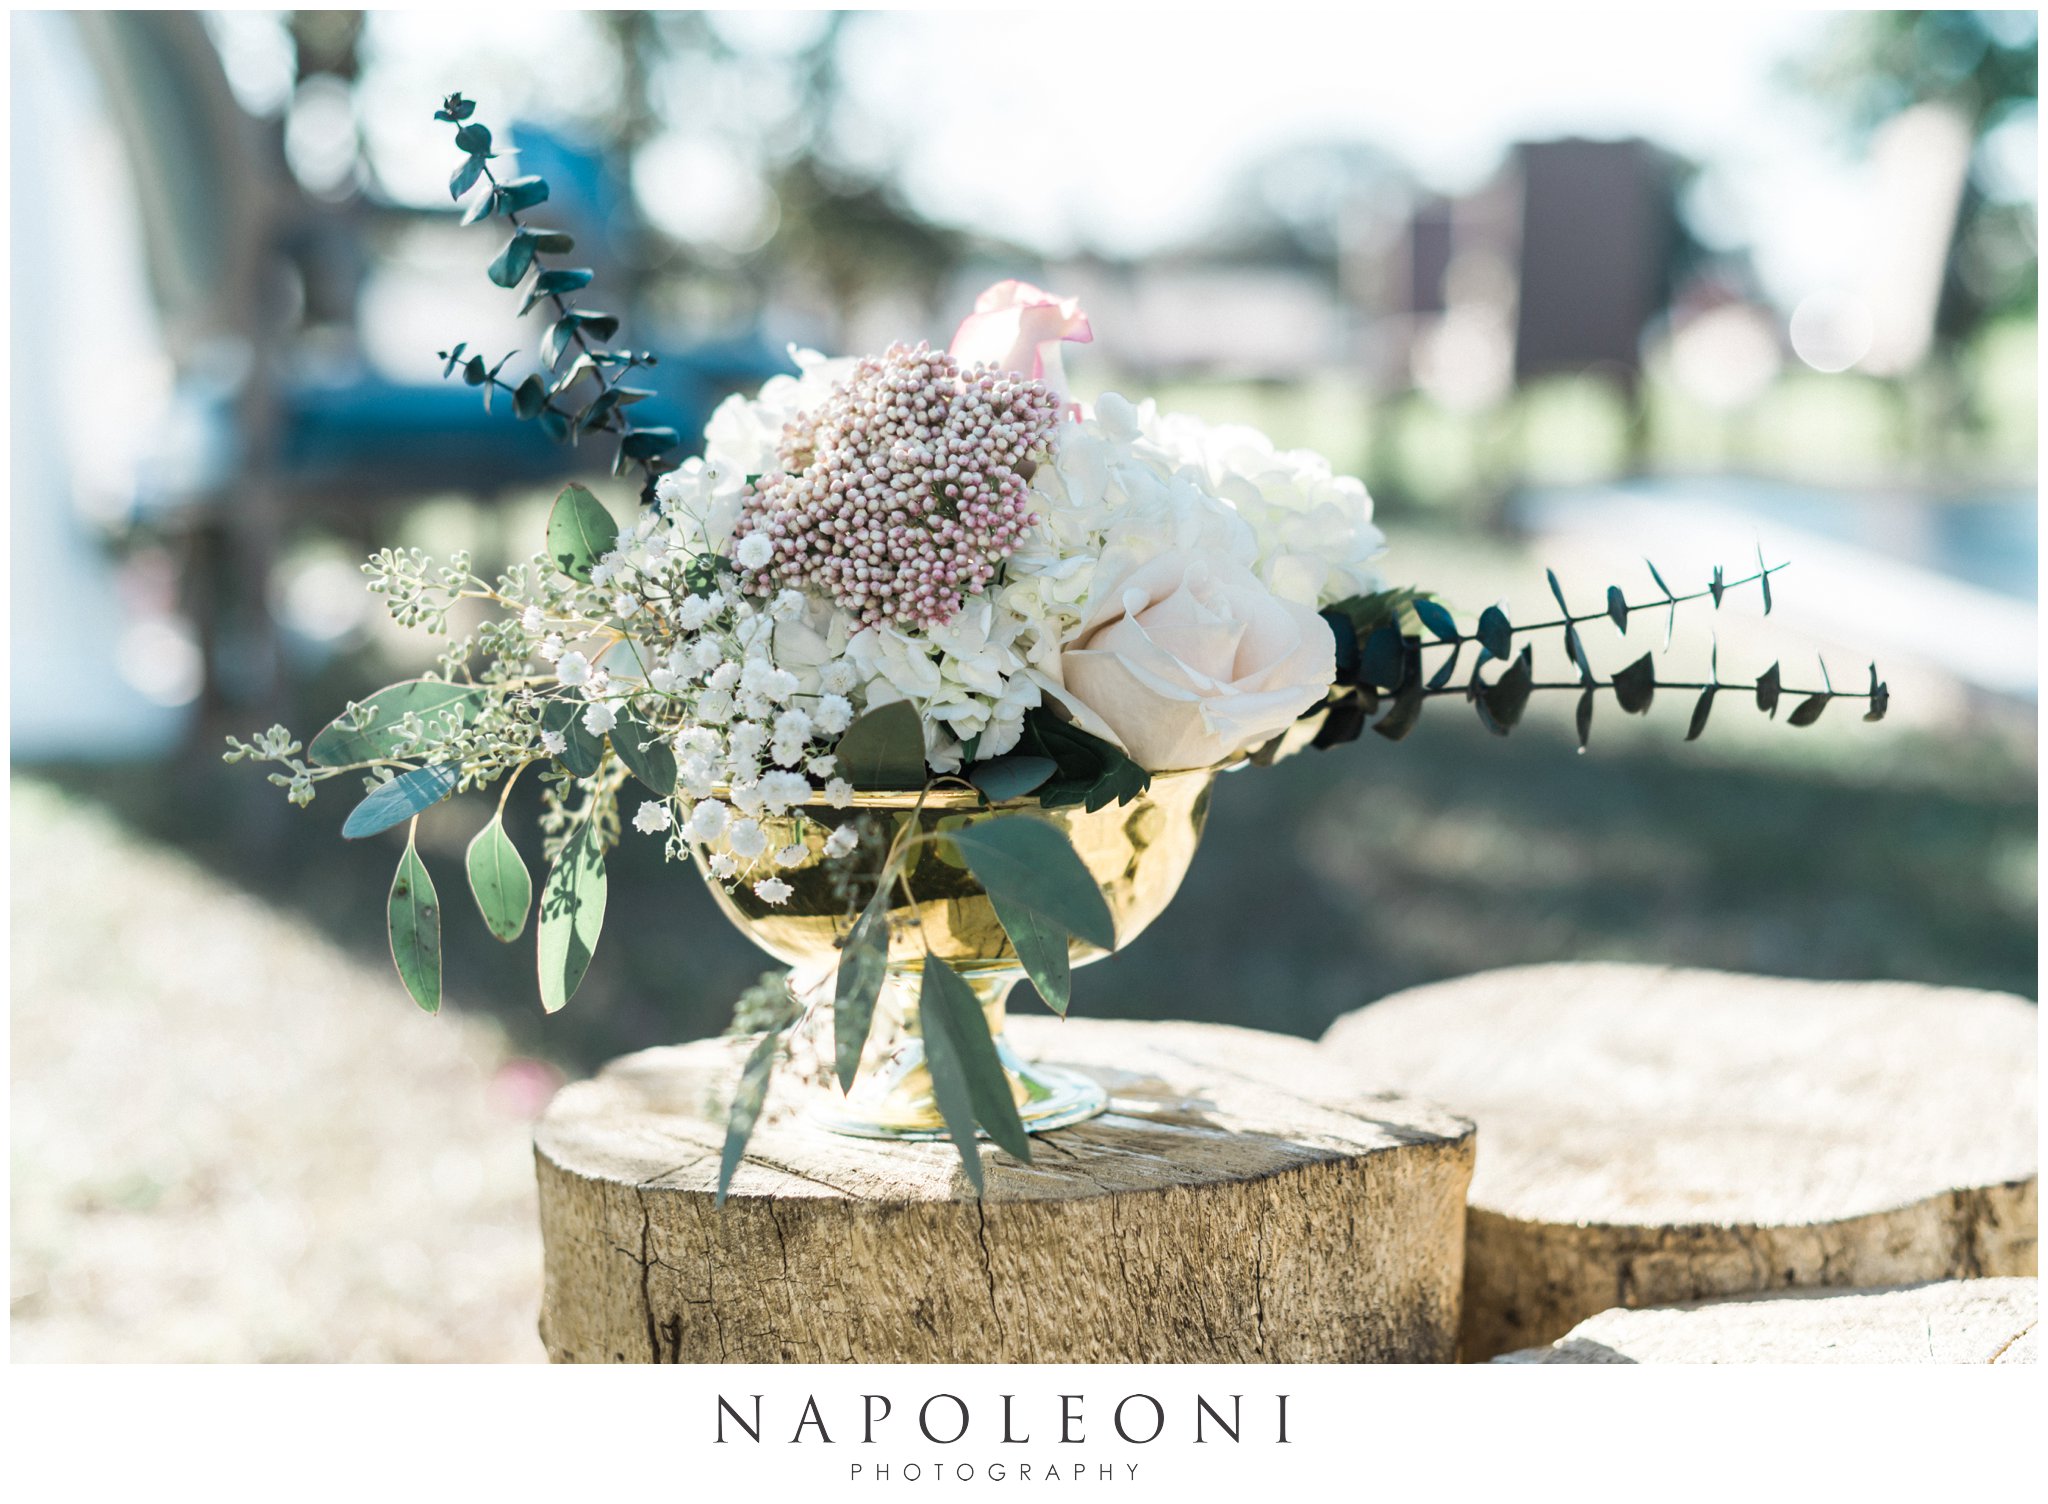 napoleoni-photography_0329a